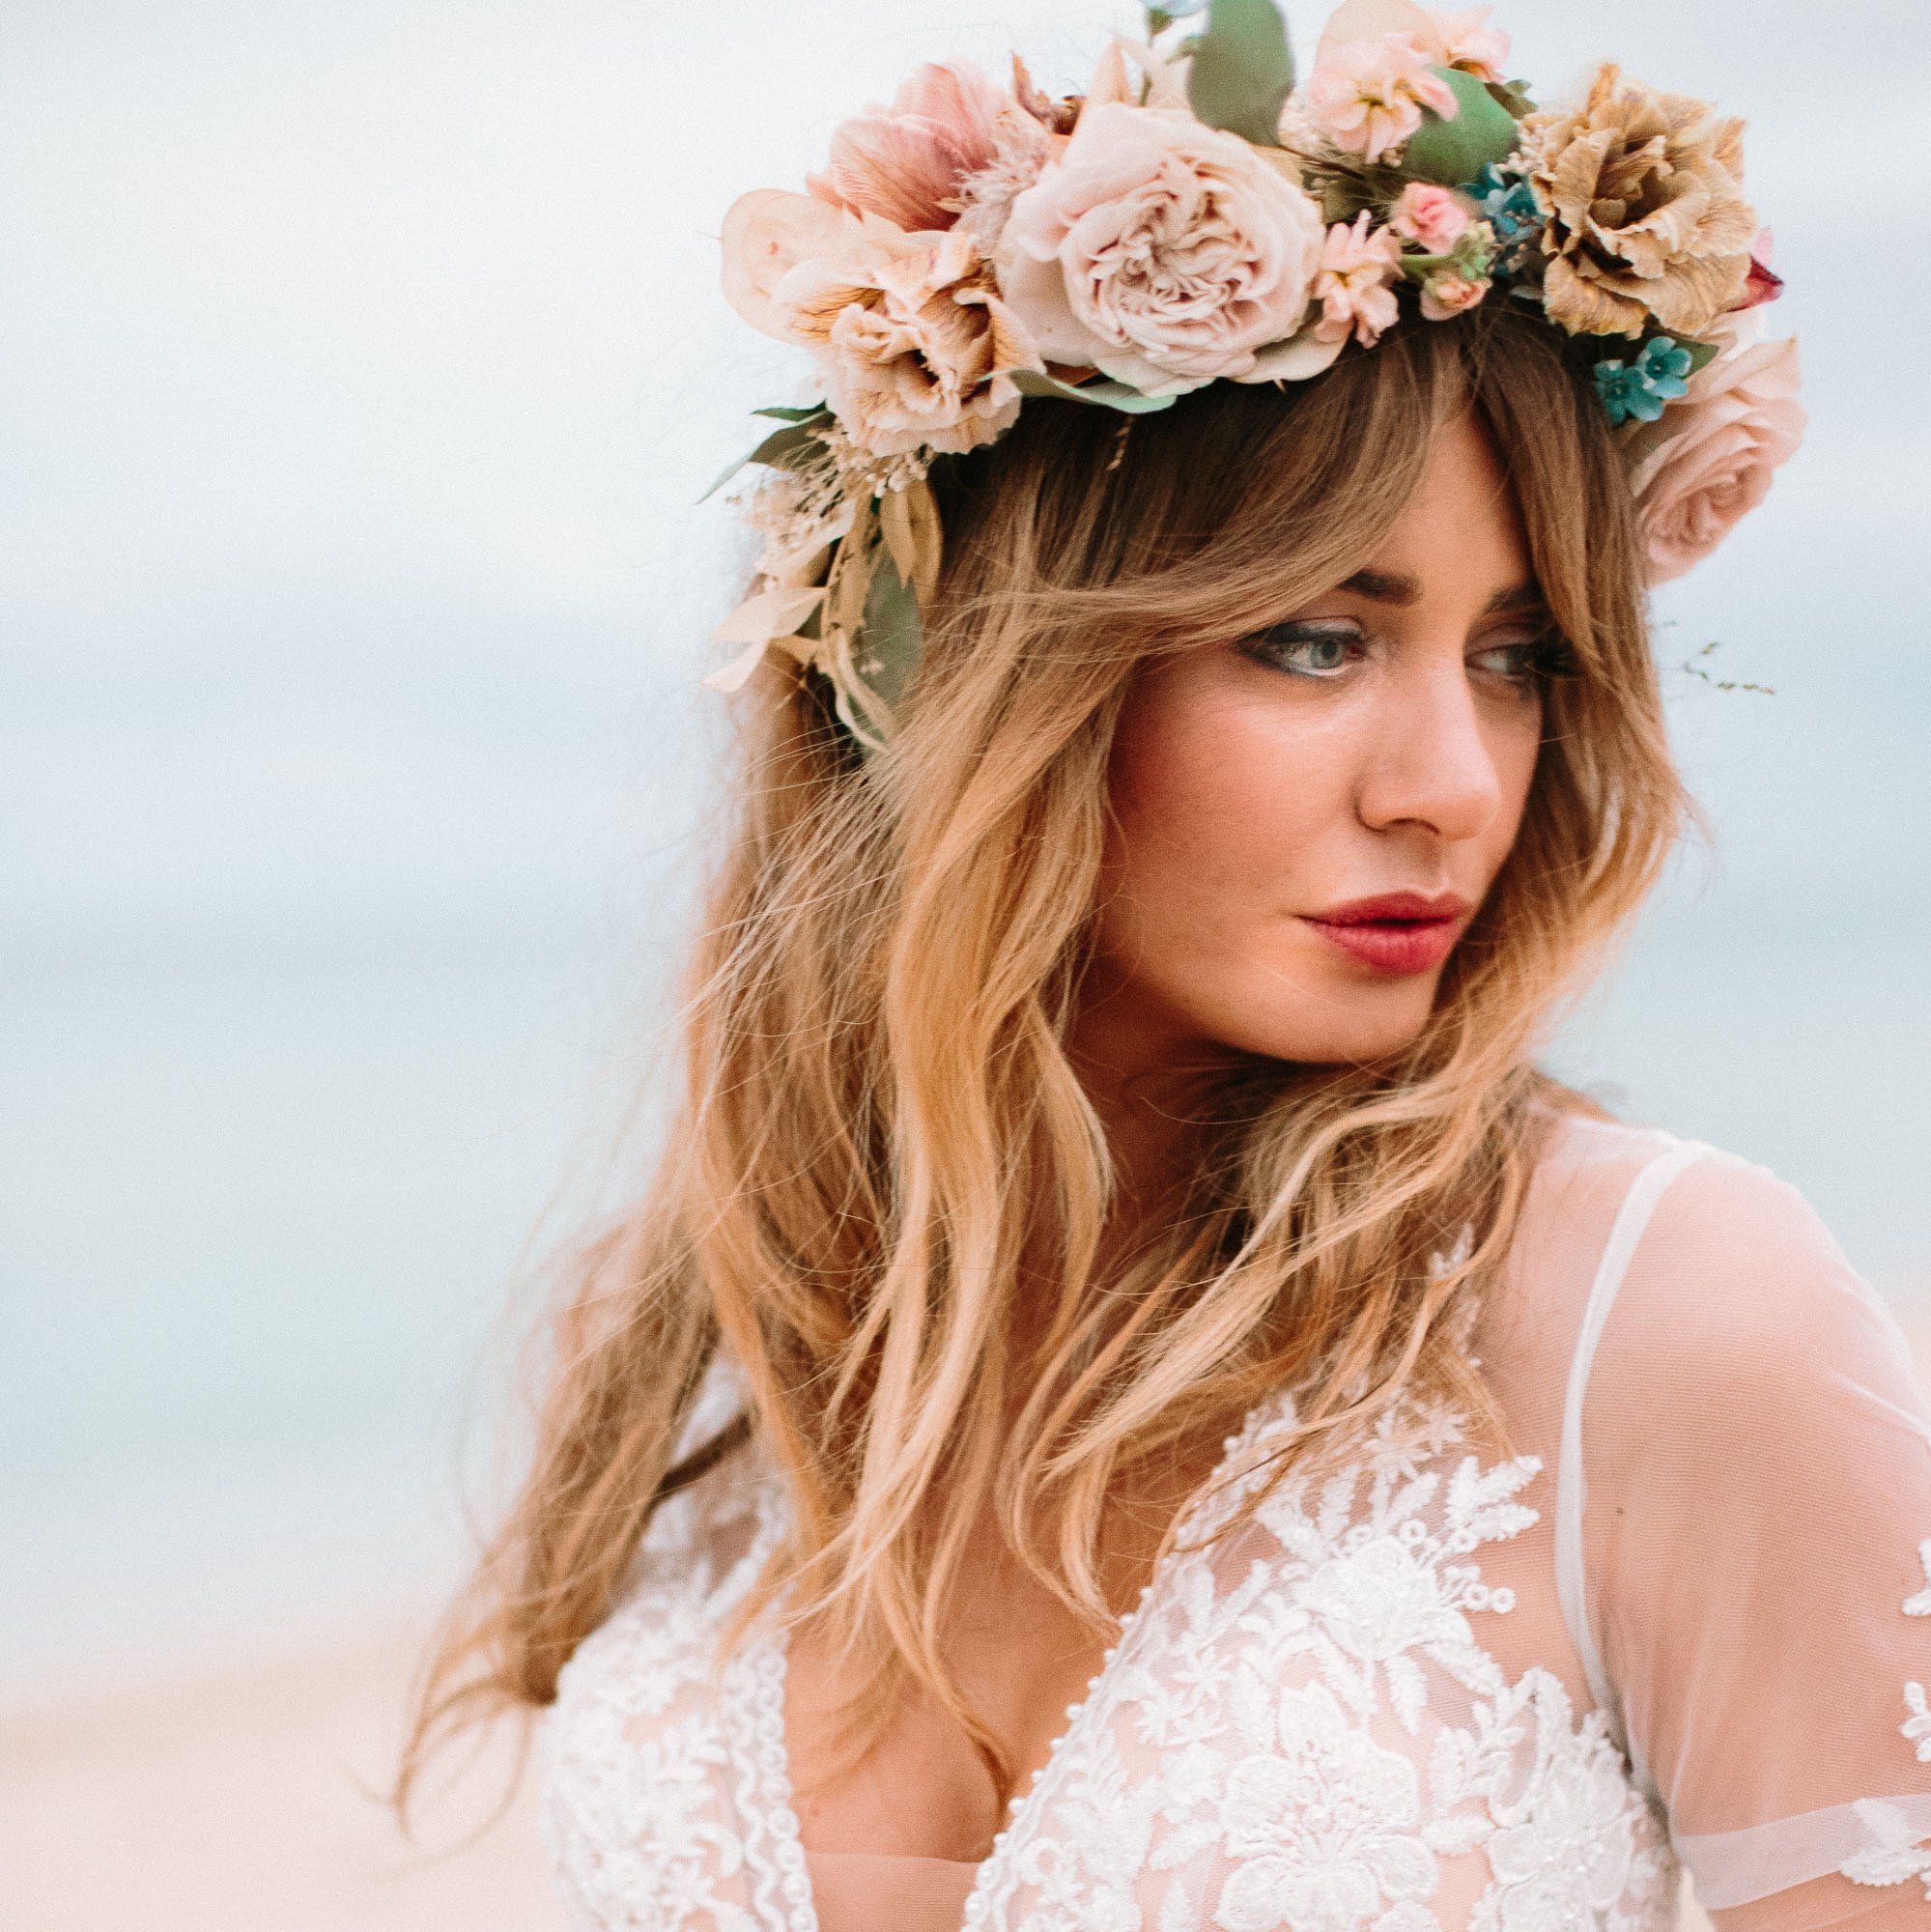 Luxury-wedding-bridal-hair-and-makeup-with-flower-crown.jpg